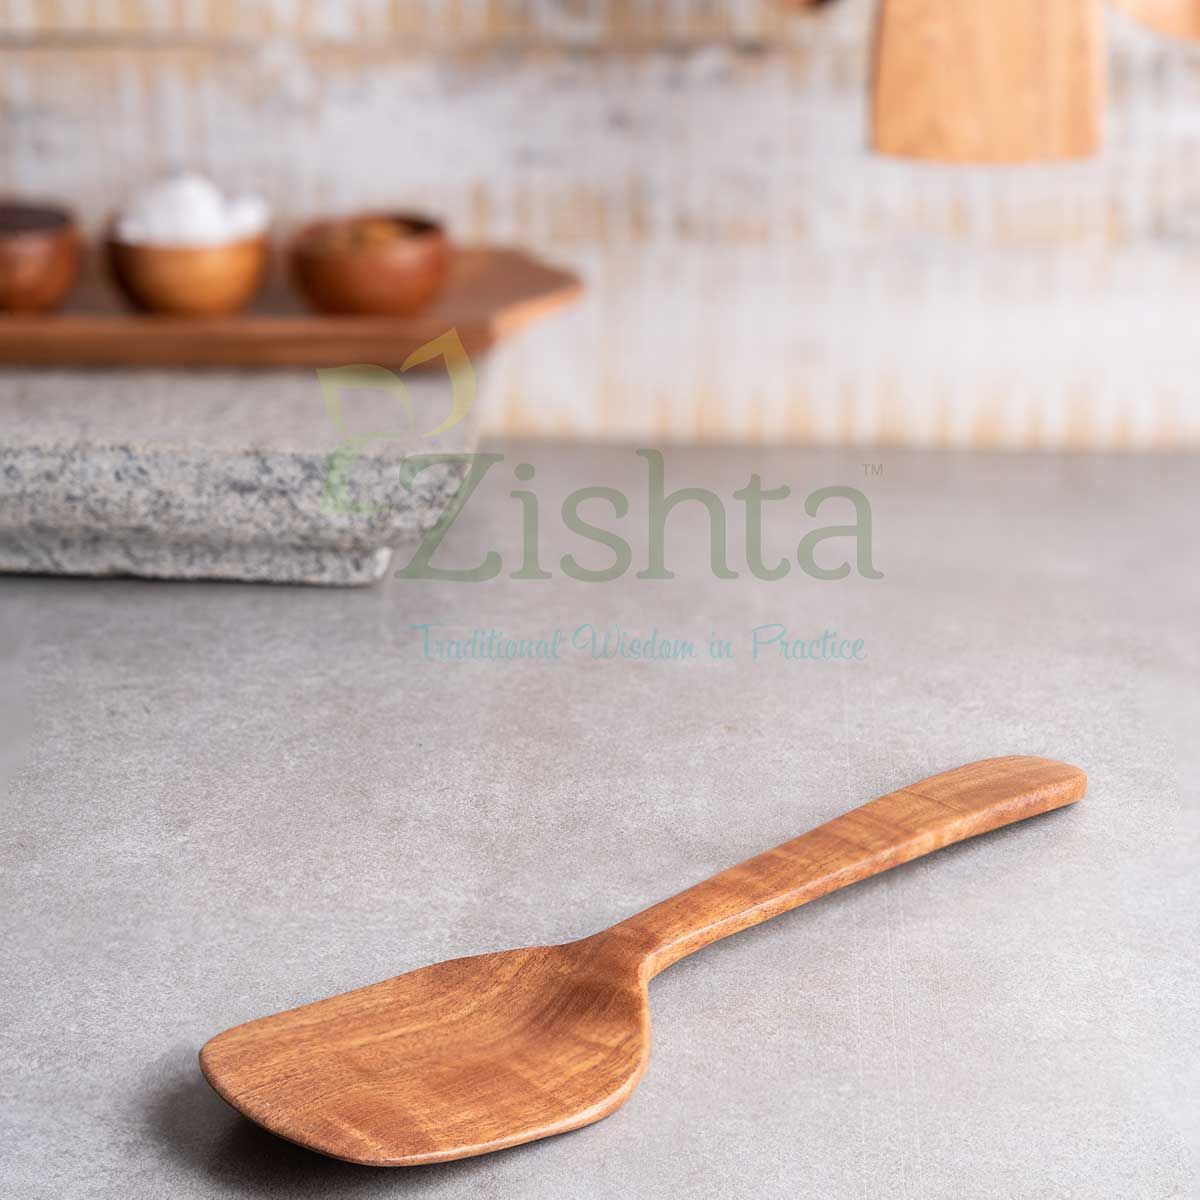 Neem Wood Spatula-Zishta Traditional Cookware